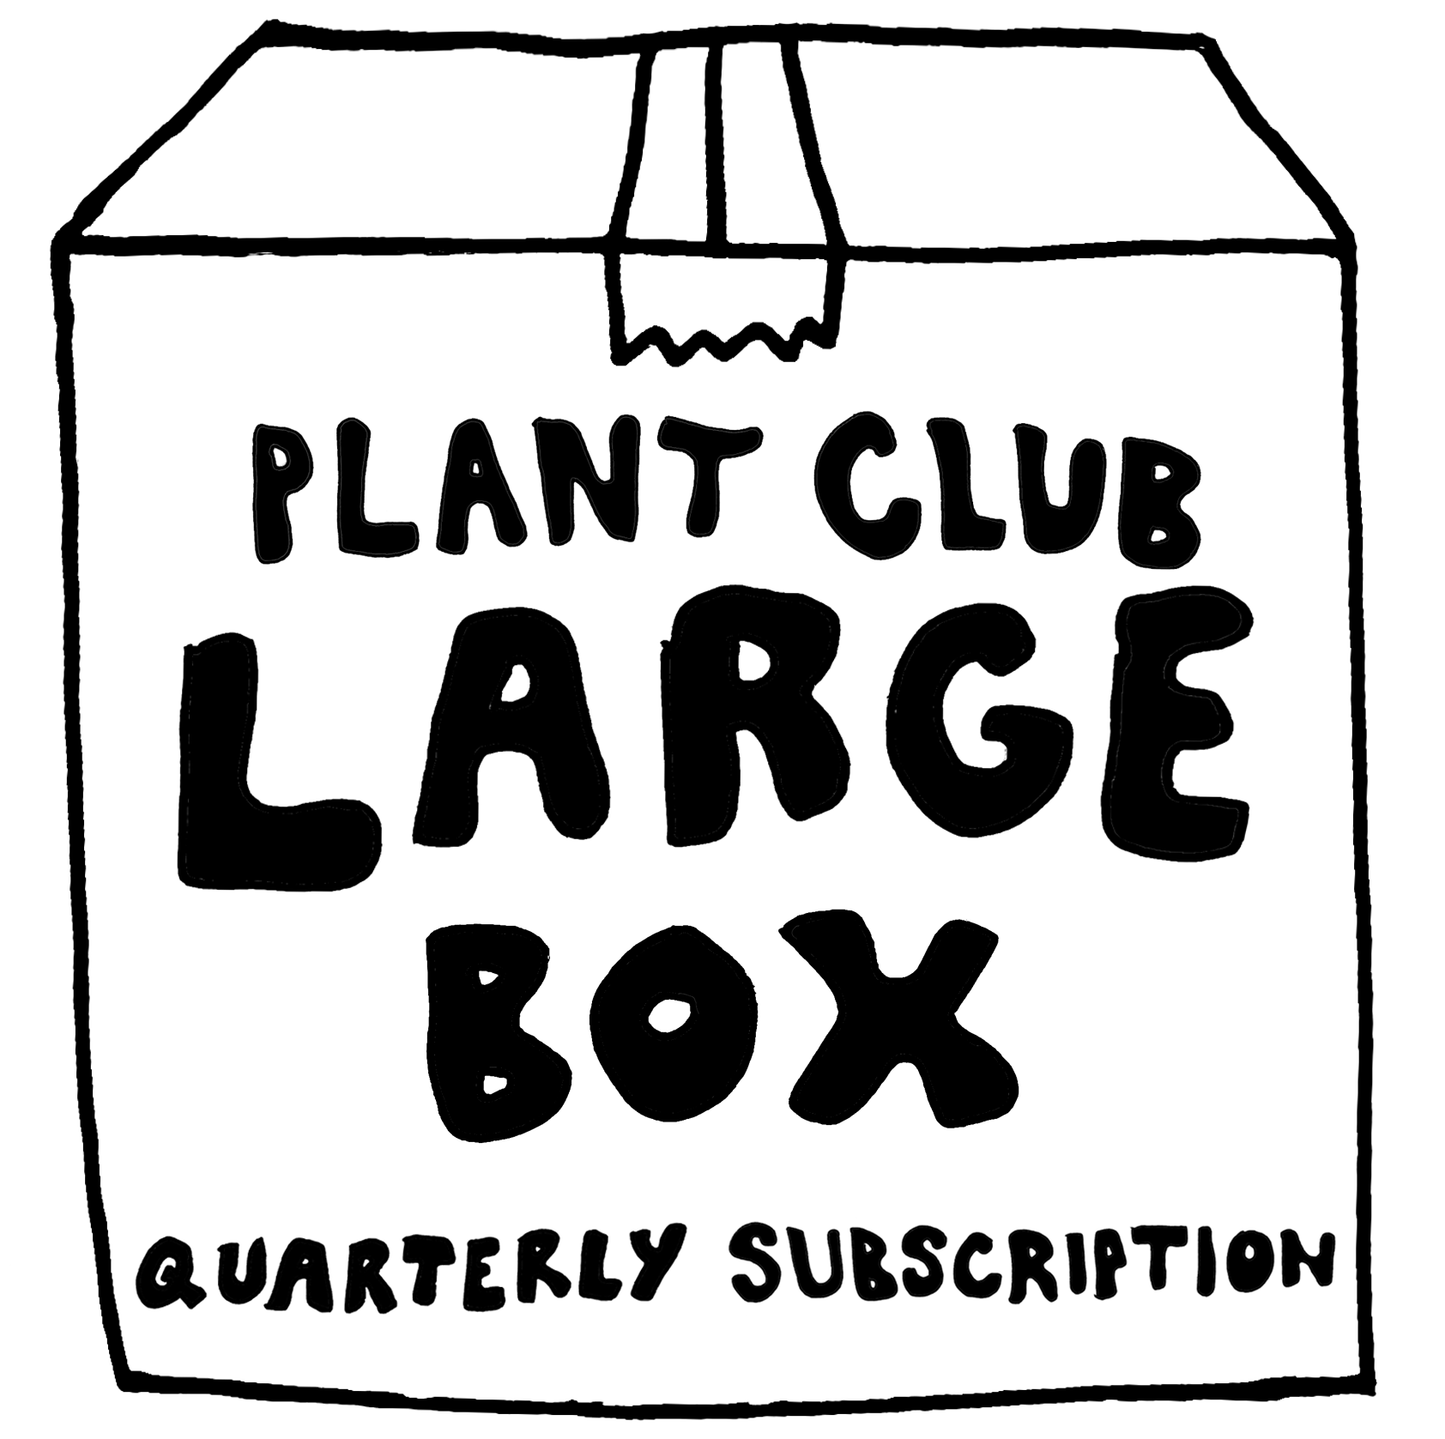 PLANT CLUB - LARGE BOX (QUARTERLY SUBSCRIPTION)